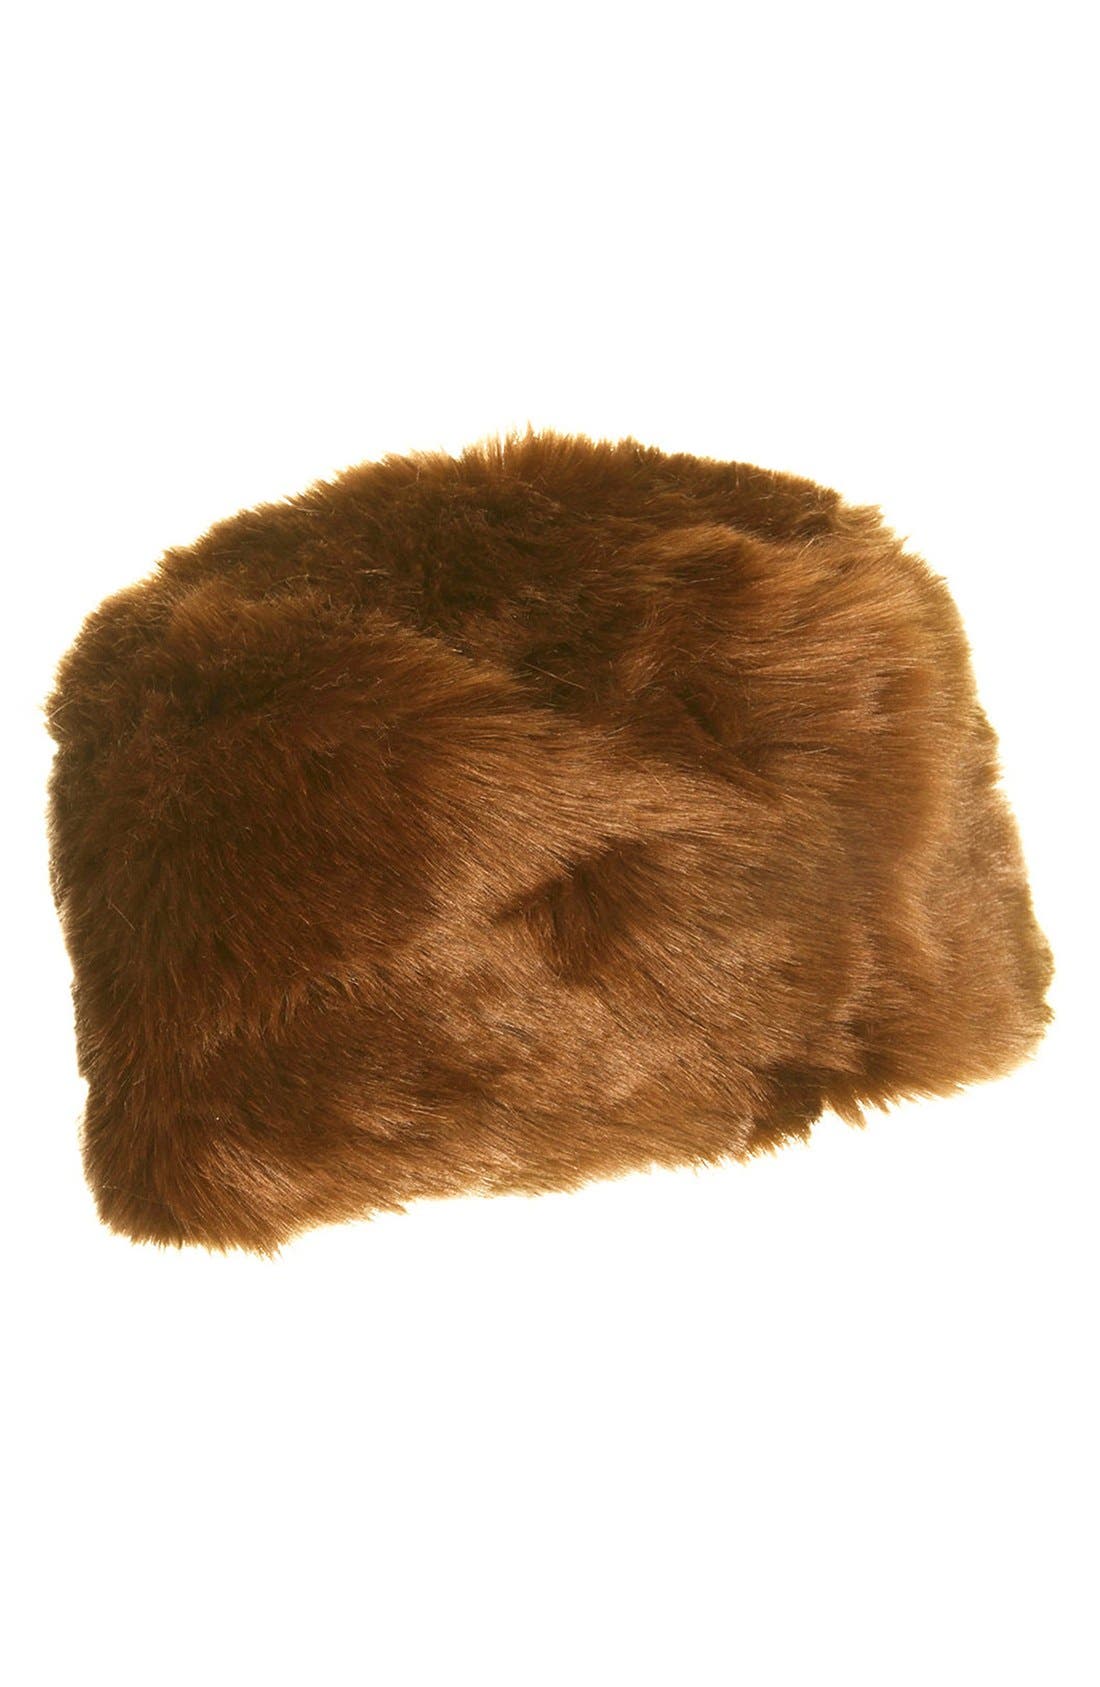 brown faux fur hat